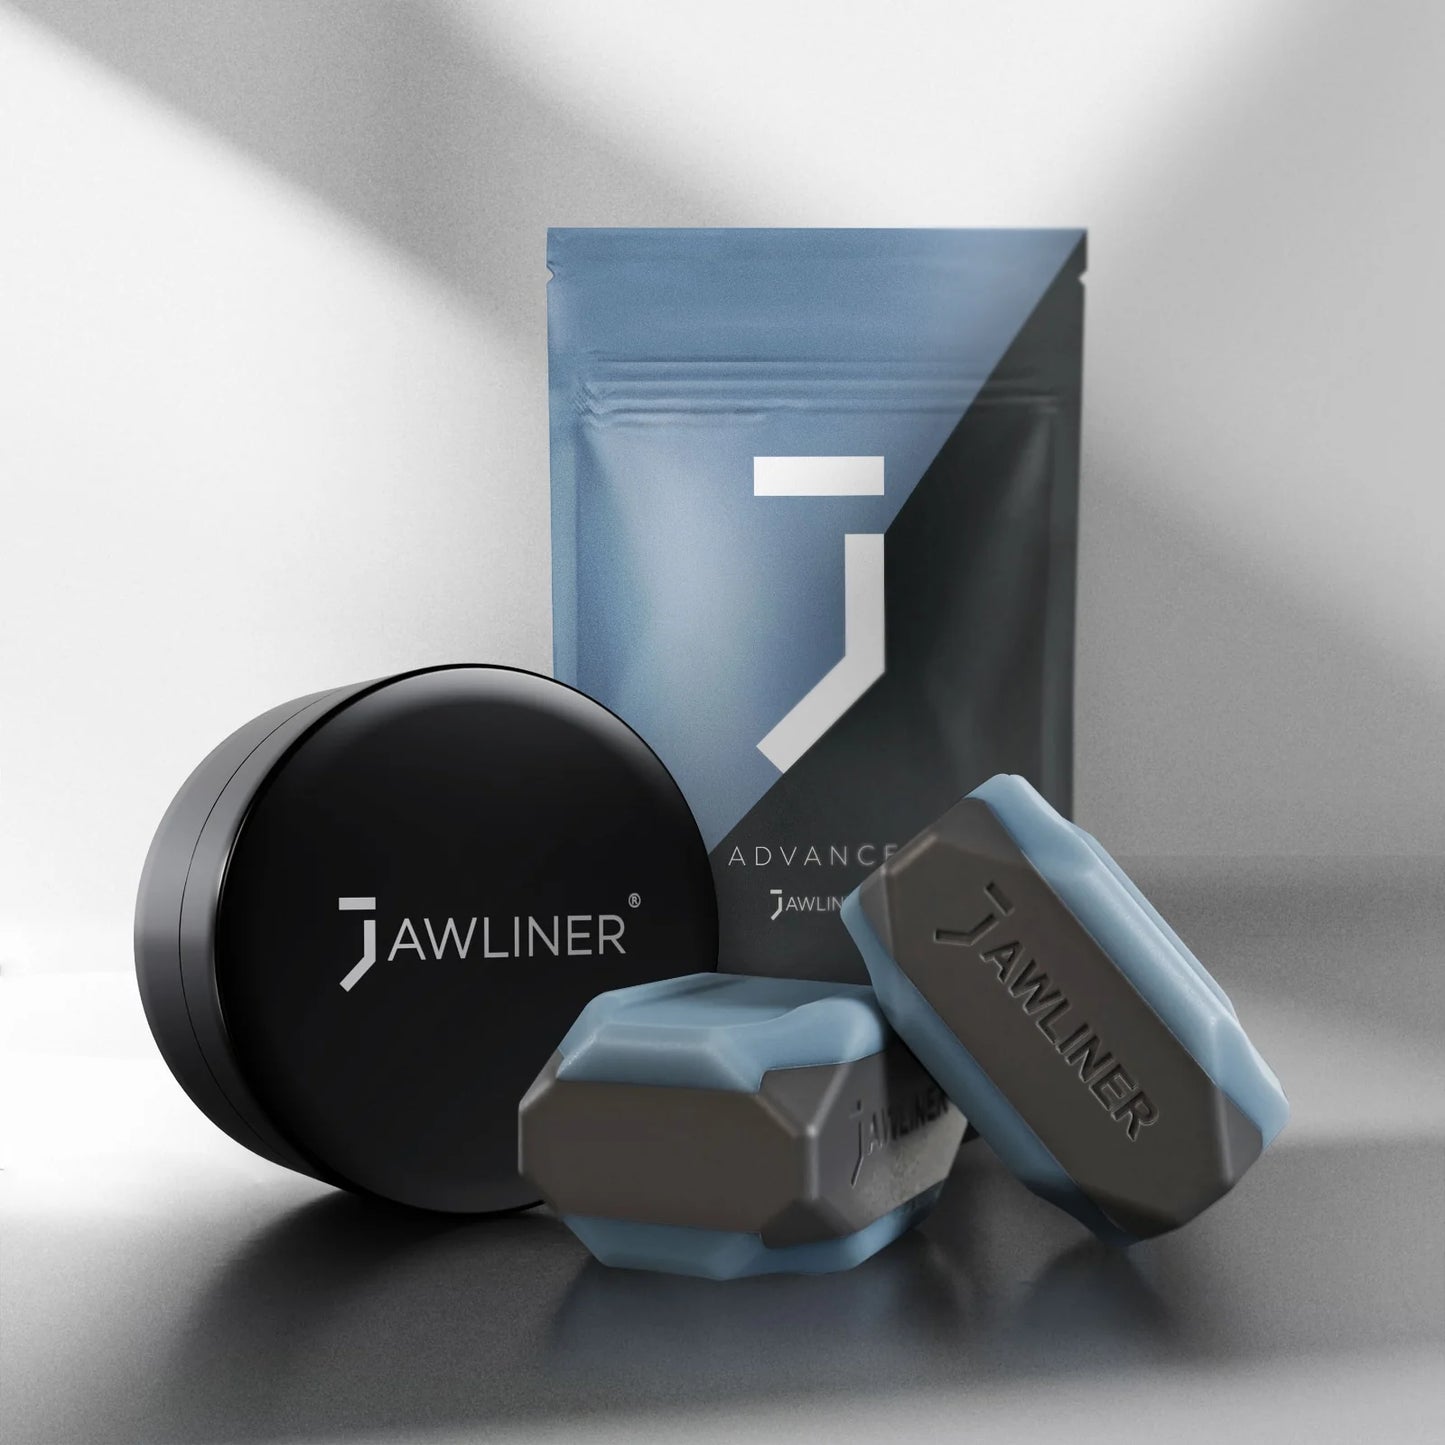 
                  
                    JAWLINER 3.0 Advanced
                  
                